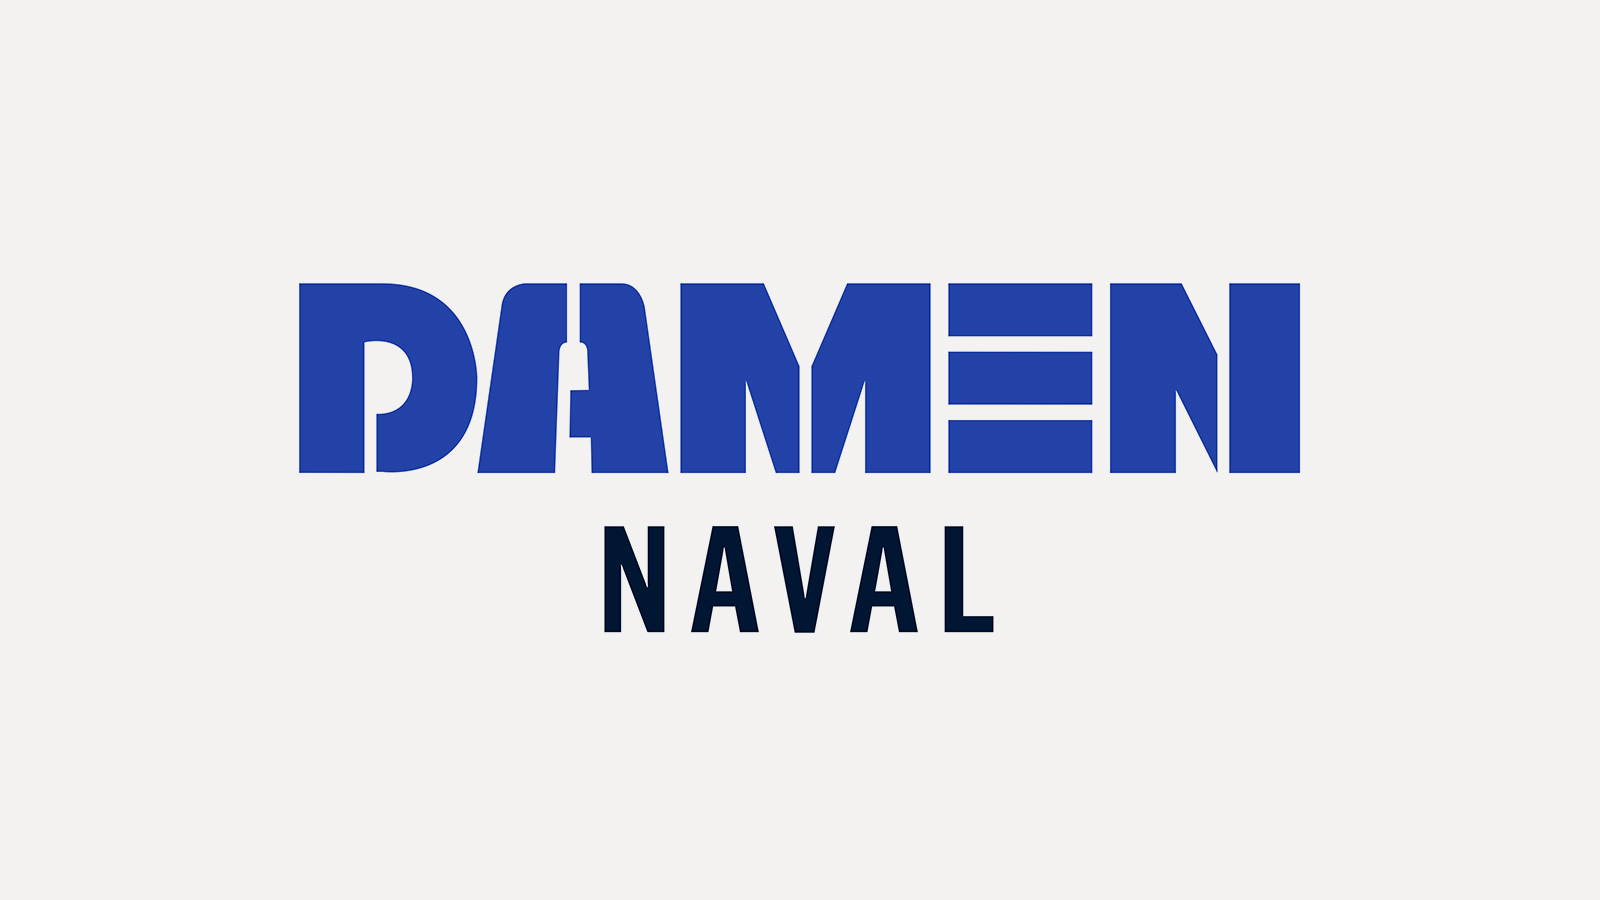 Damen Naval logo centred